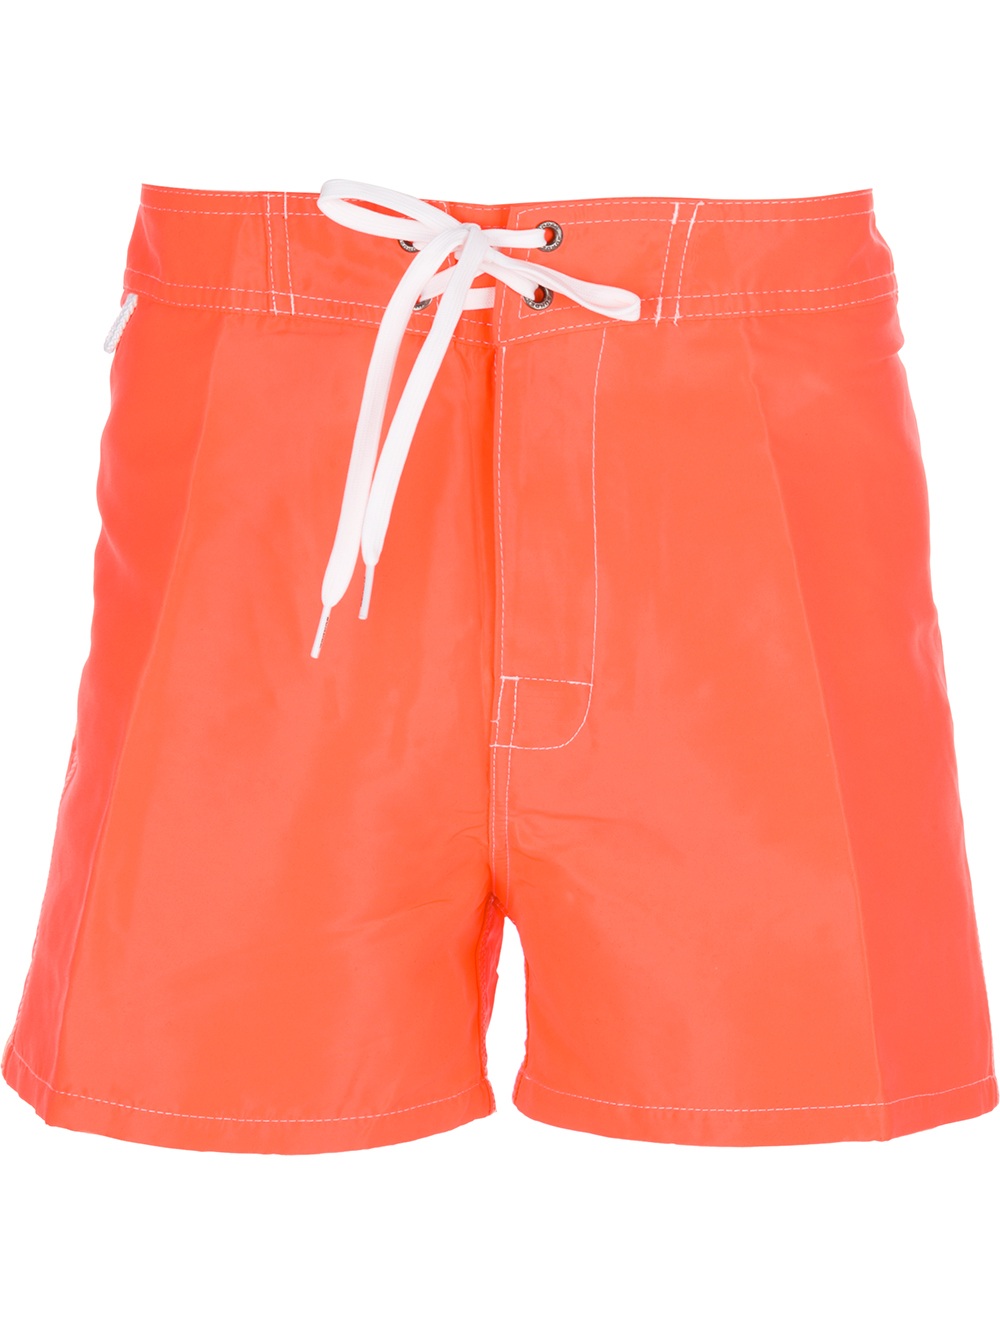 Sundek Swim Shorts in Orange for Men (yellow & orange) | Lyst